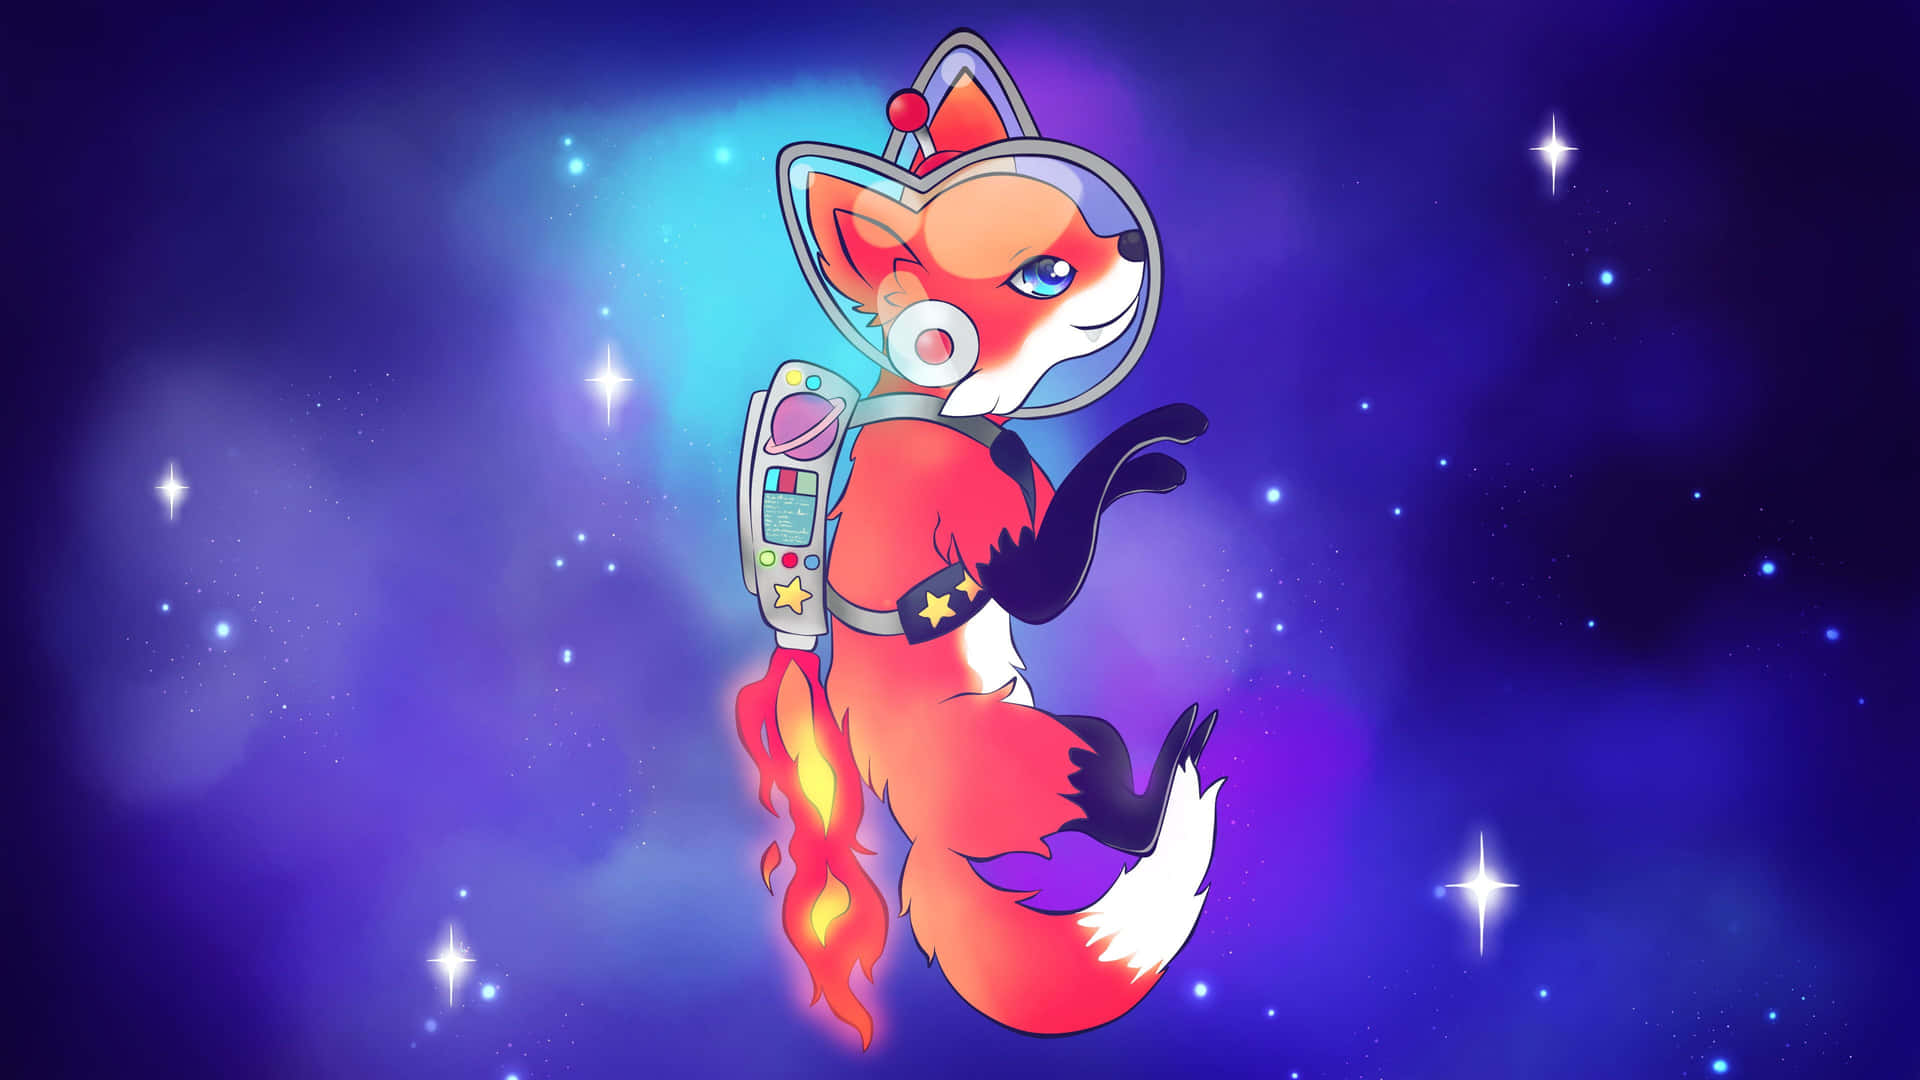 Adorable Kawaii Fox in a Magical Forest Wallpaper